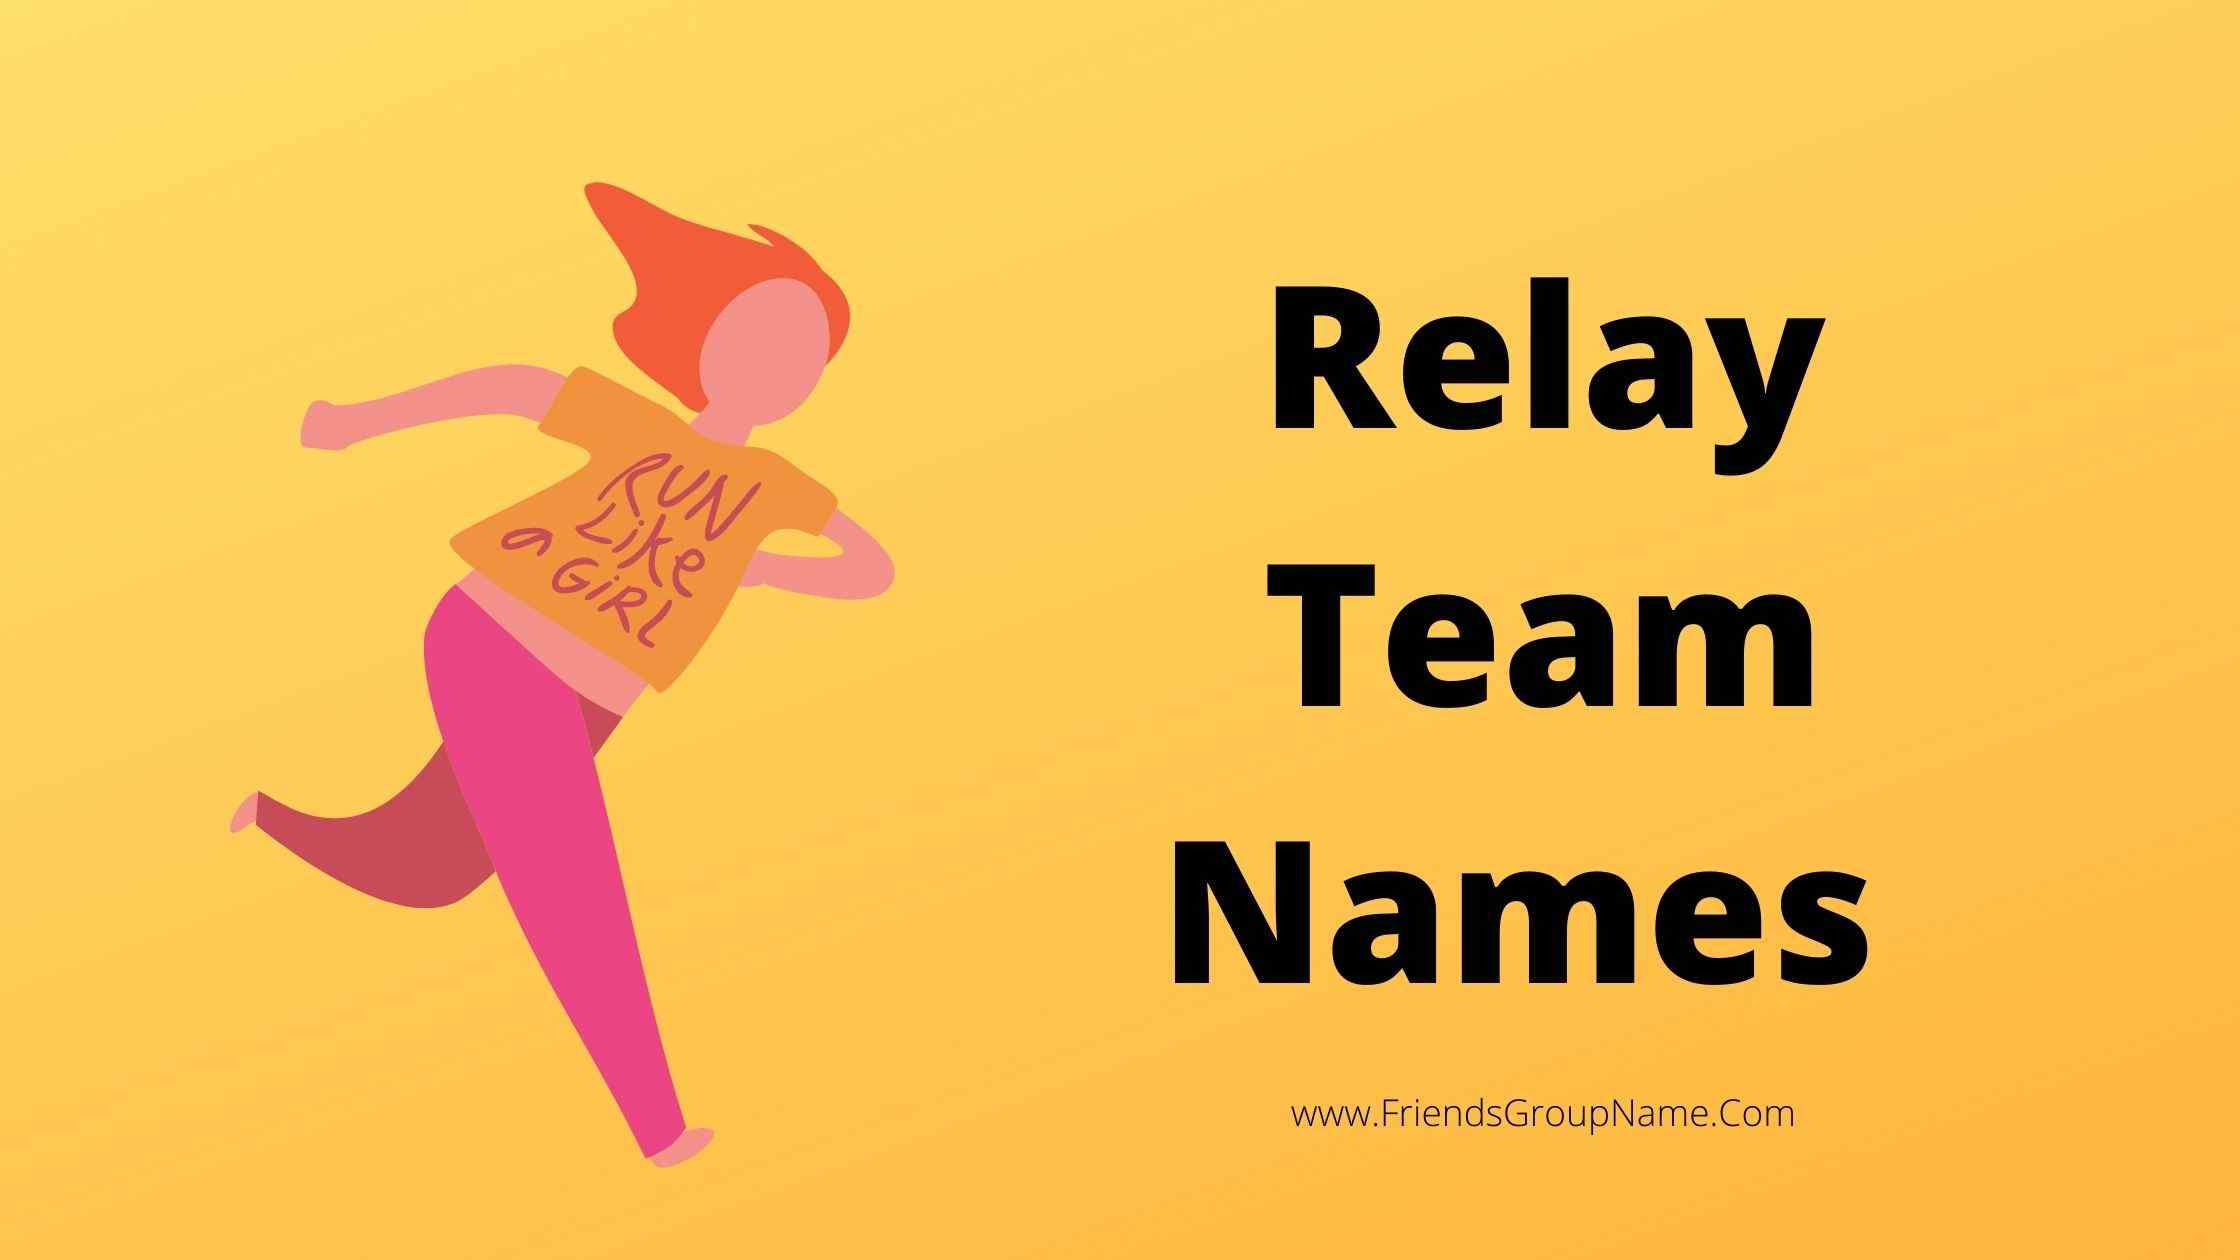 Relay Team Names